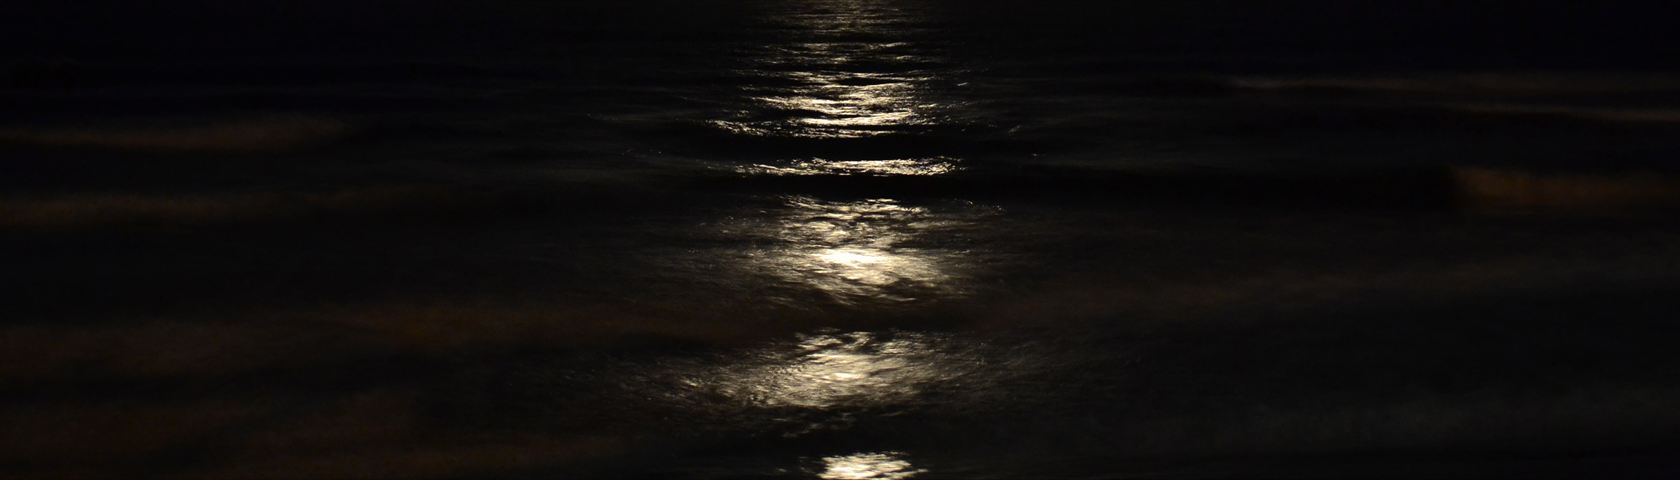 Moon on Ocean